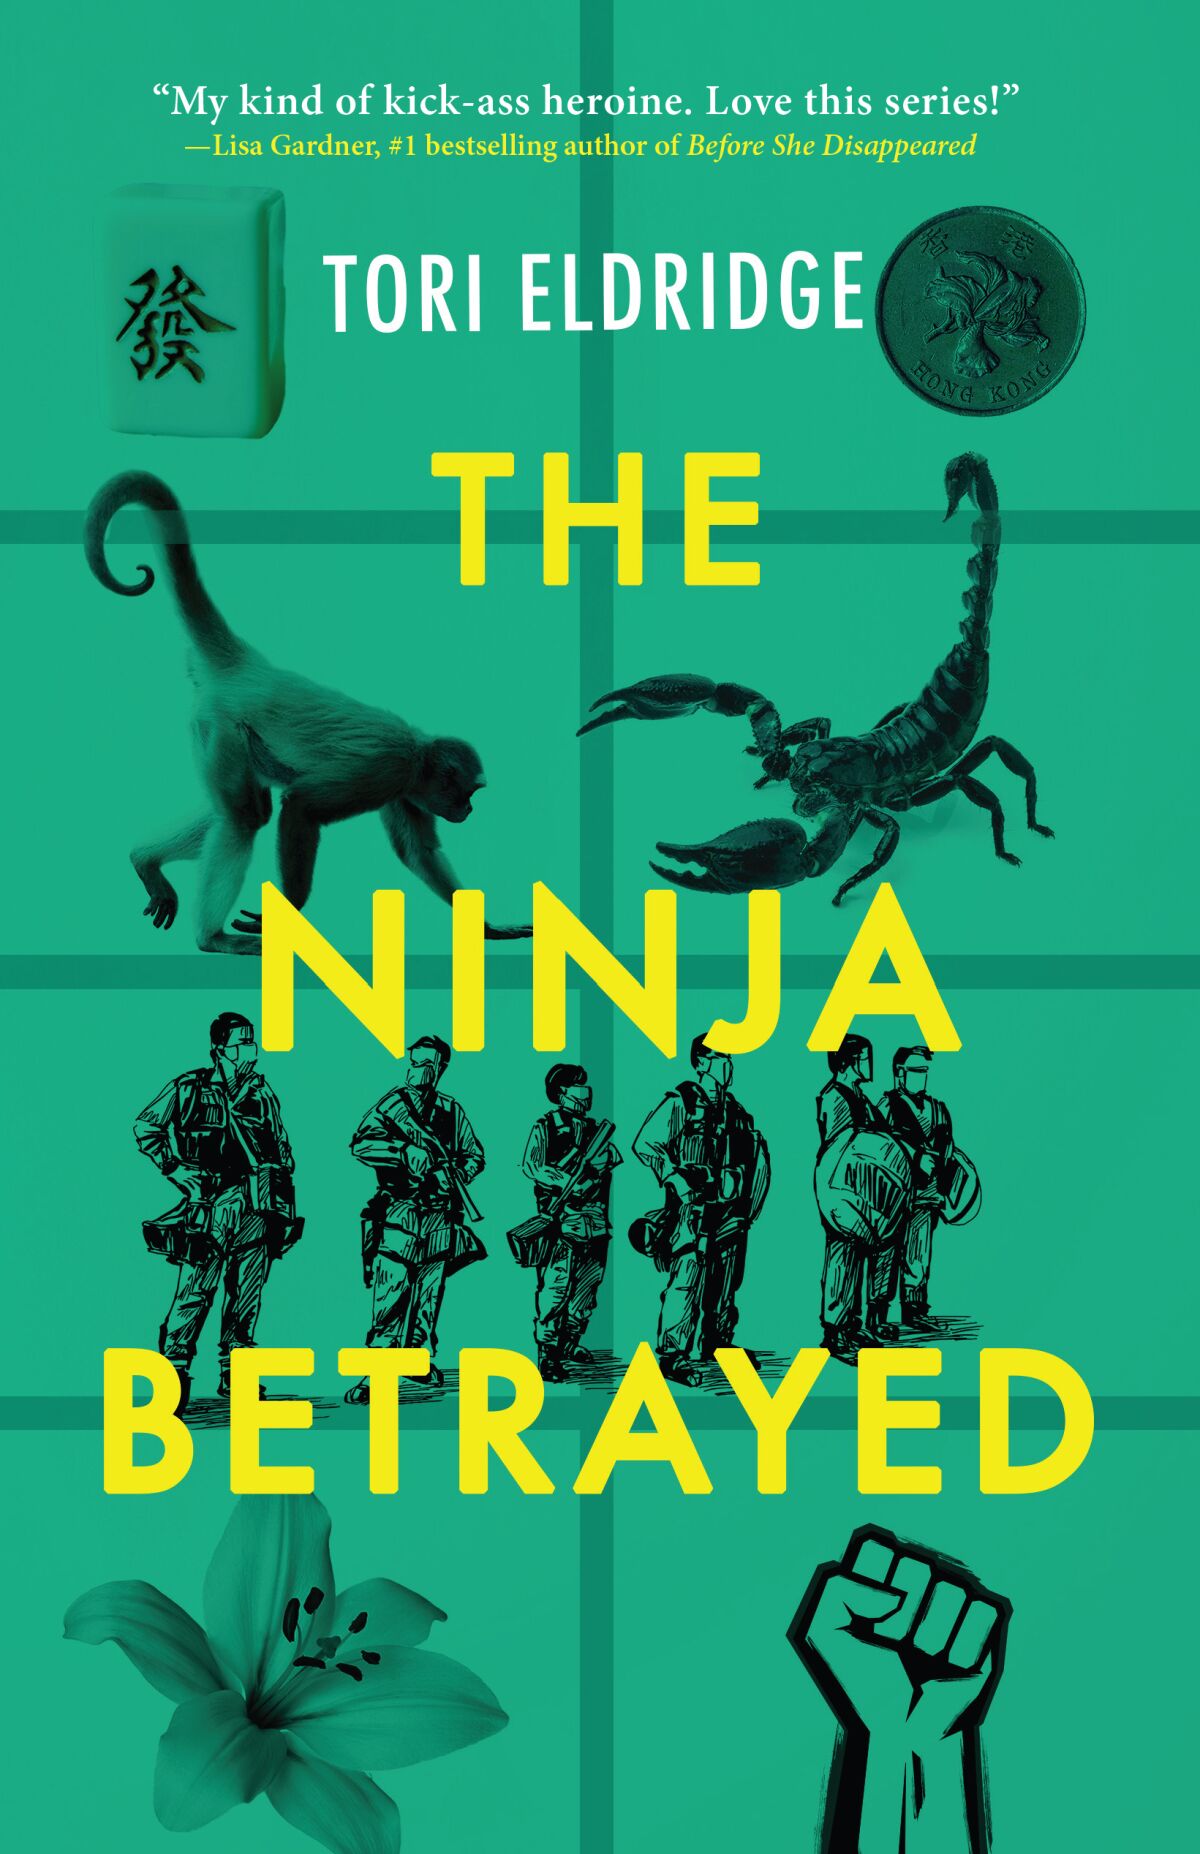 Book cover of "The Ninja Betrayed" by Tori Eldridge